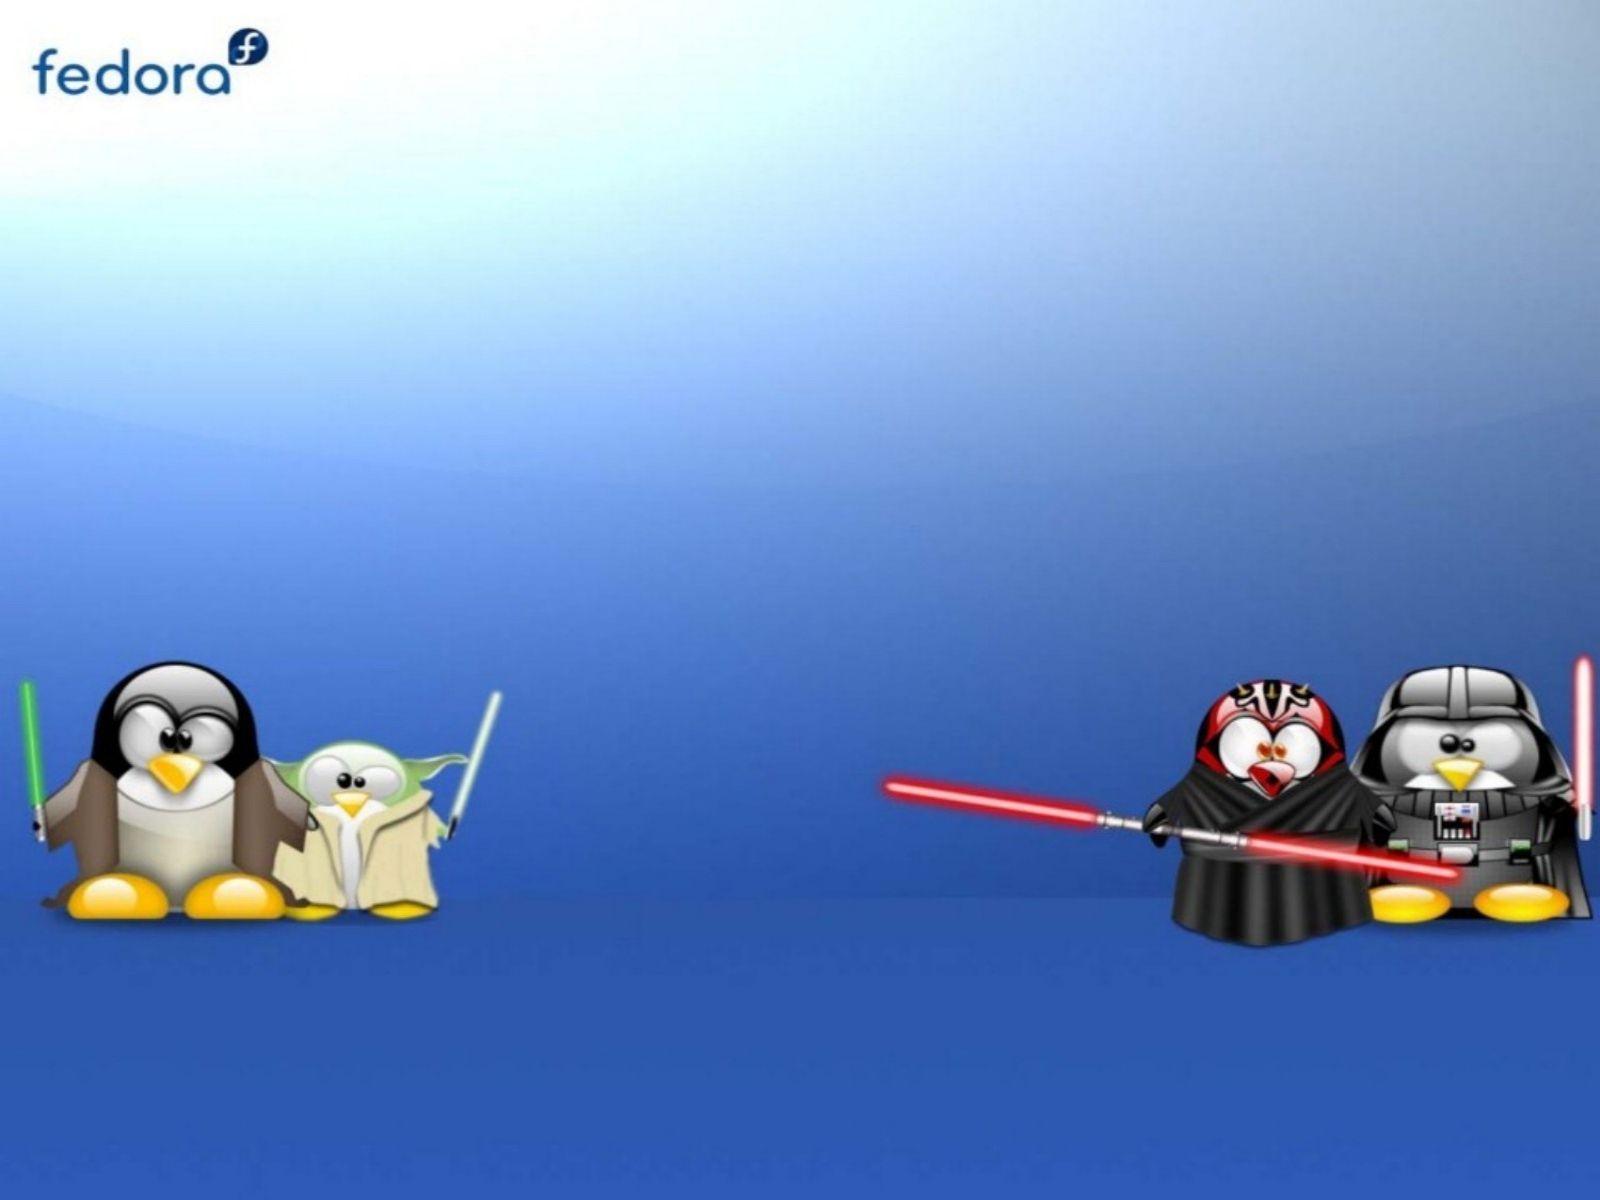 Star Wars Fedora Movie Wallpaper Picture Fedora Linux